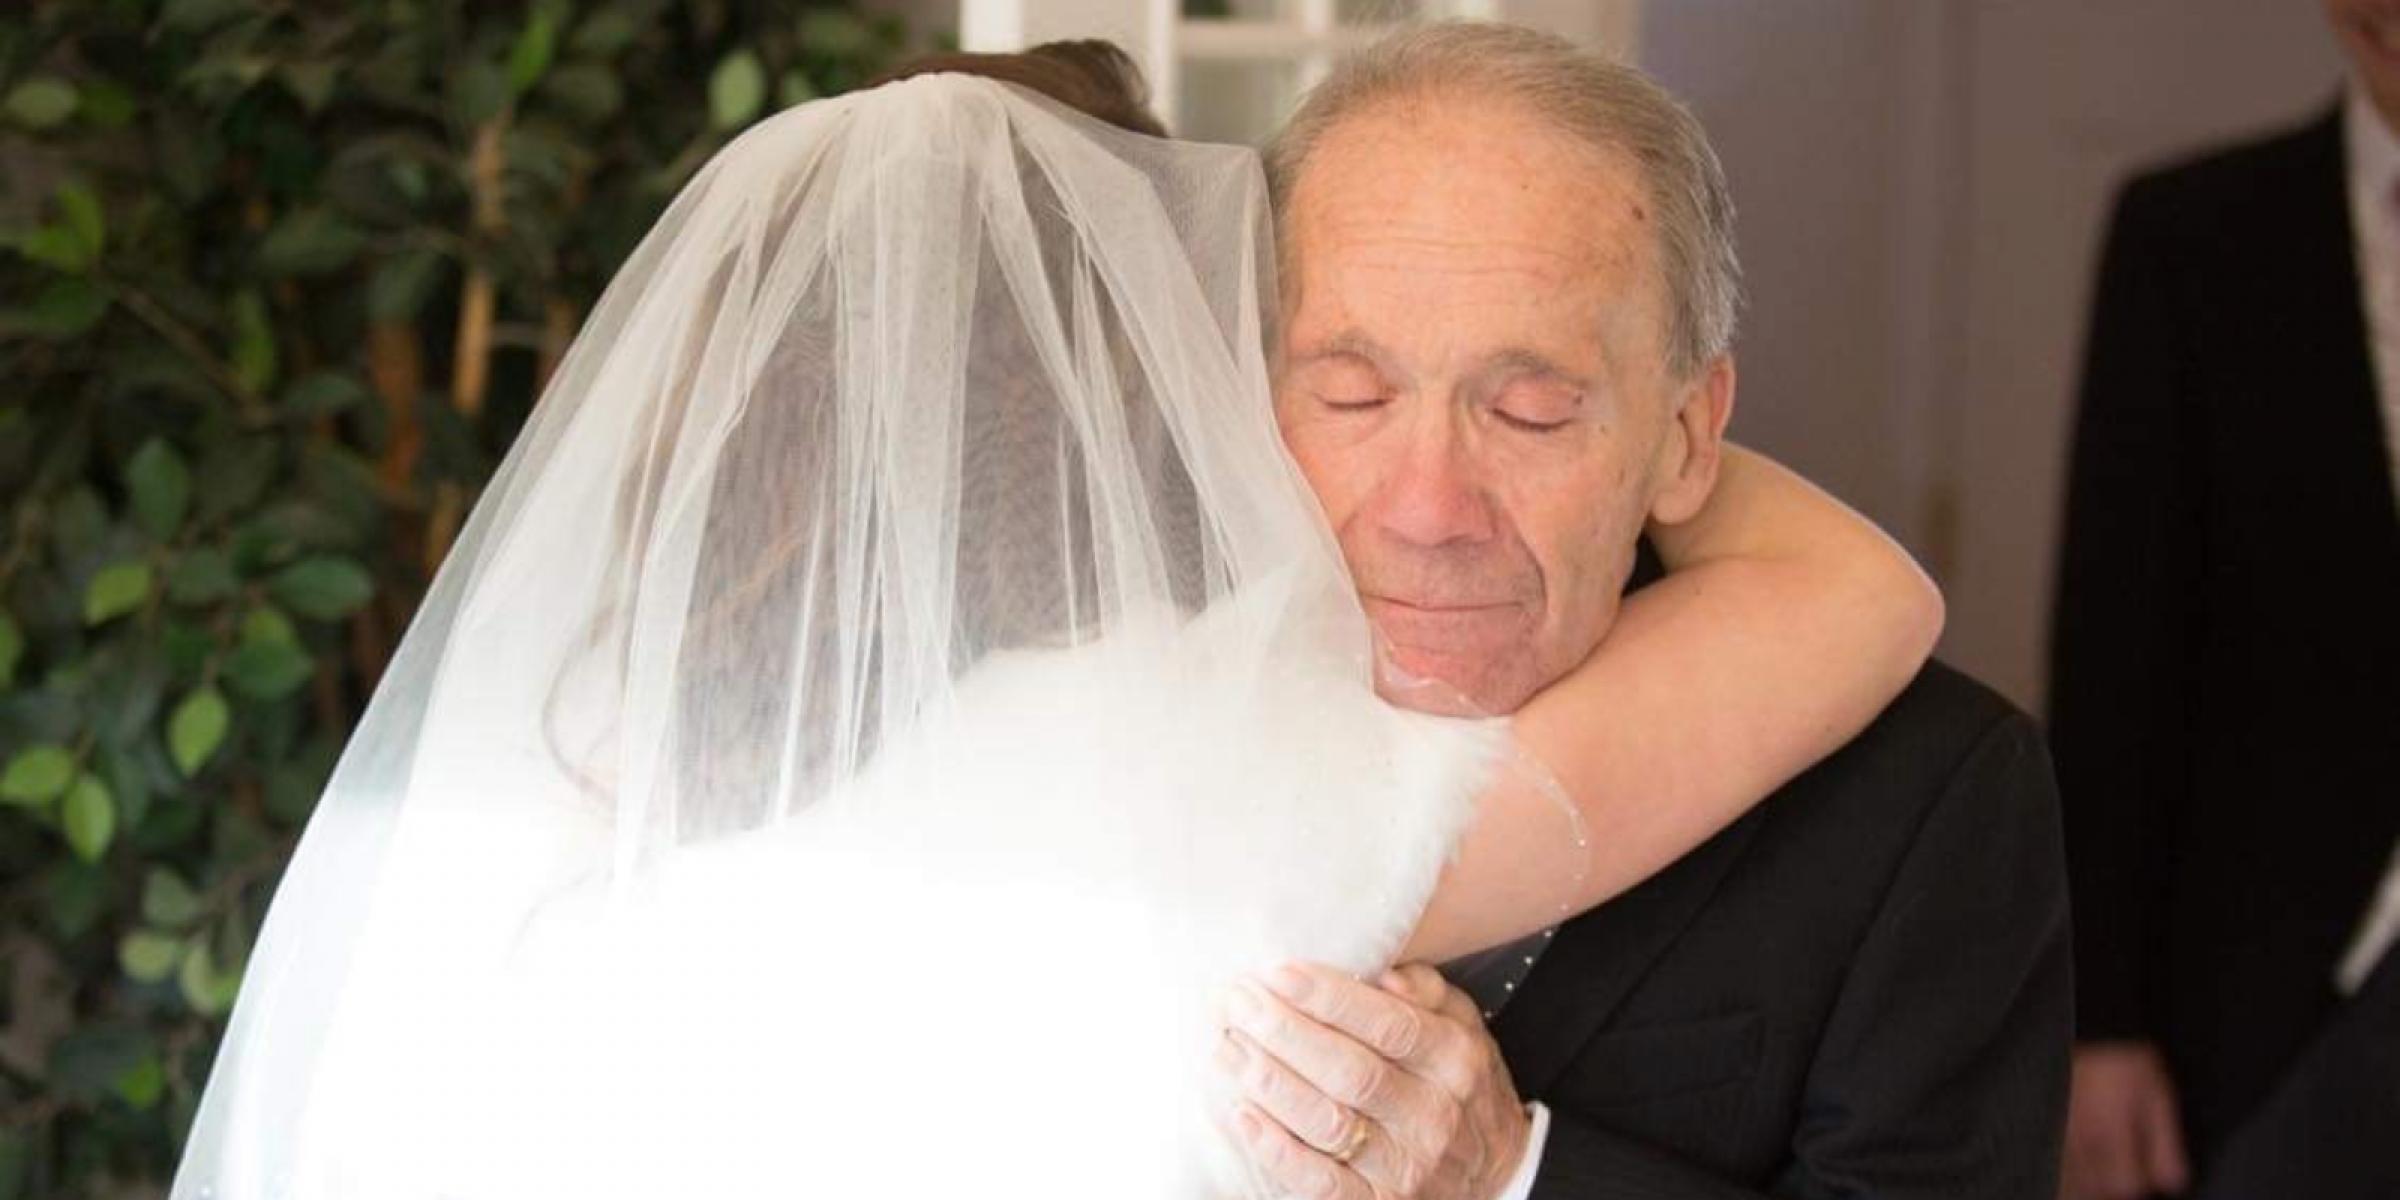 Natasha's granddad hugging her on her wedding day